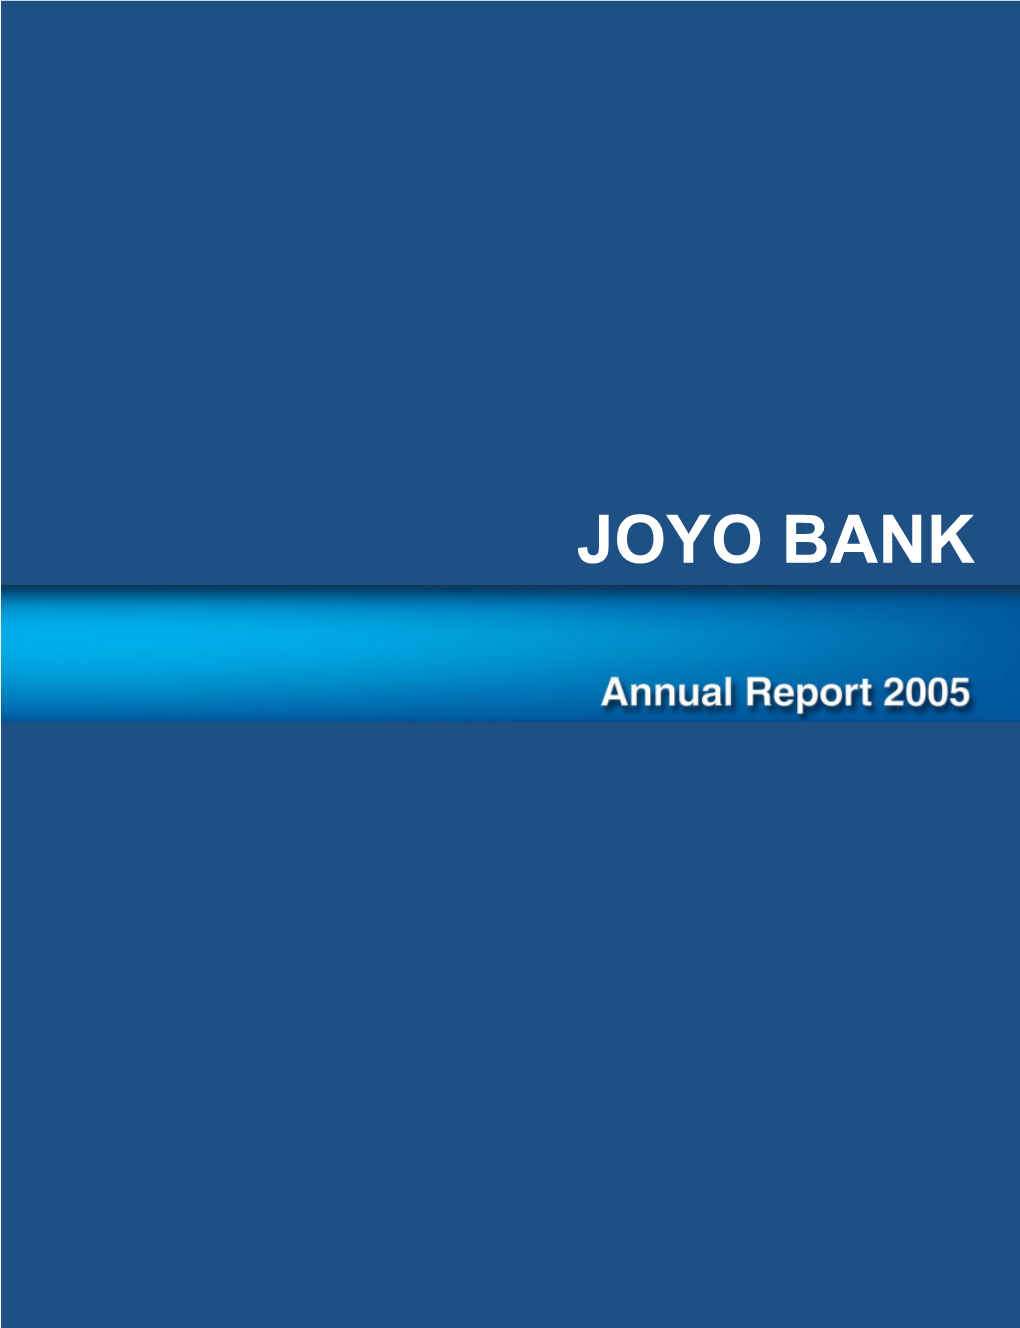 Joyo Bank Profile